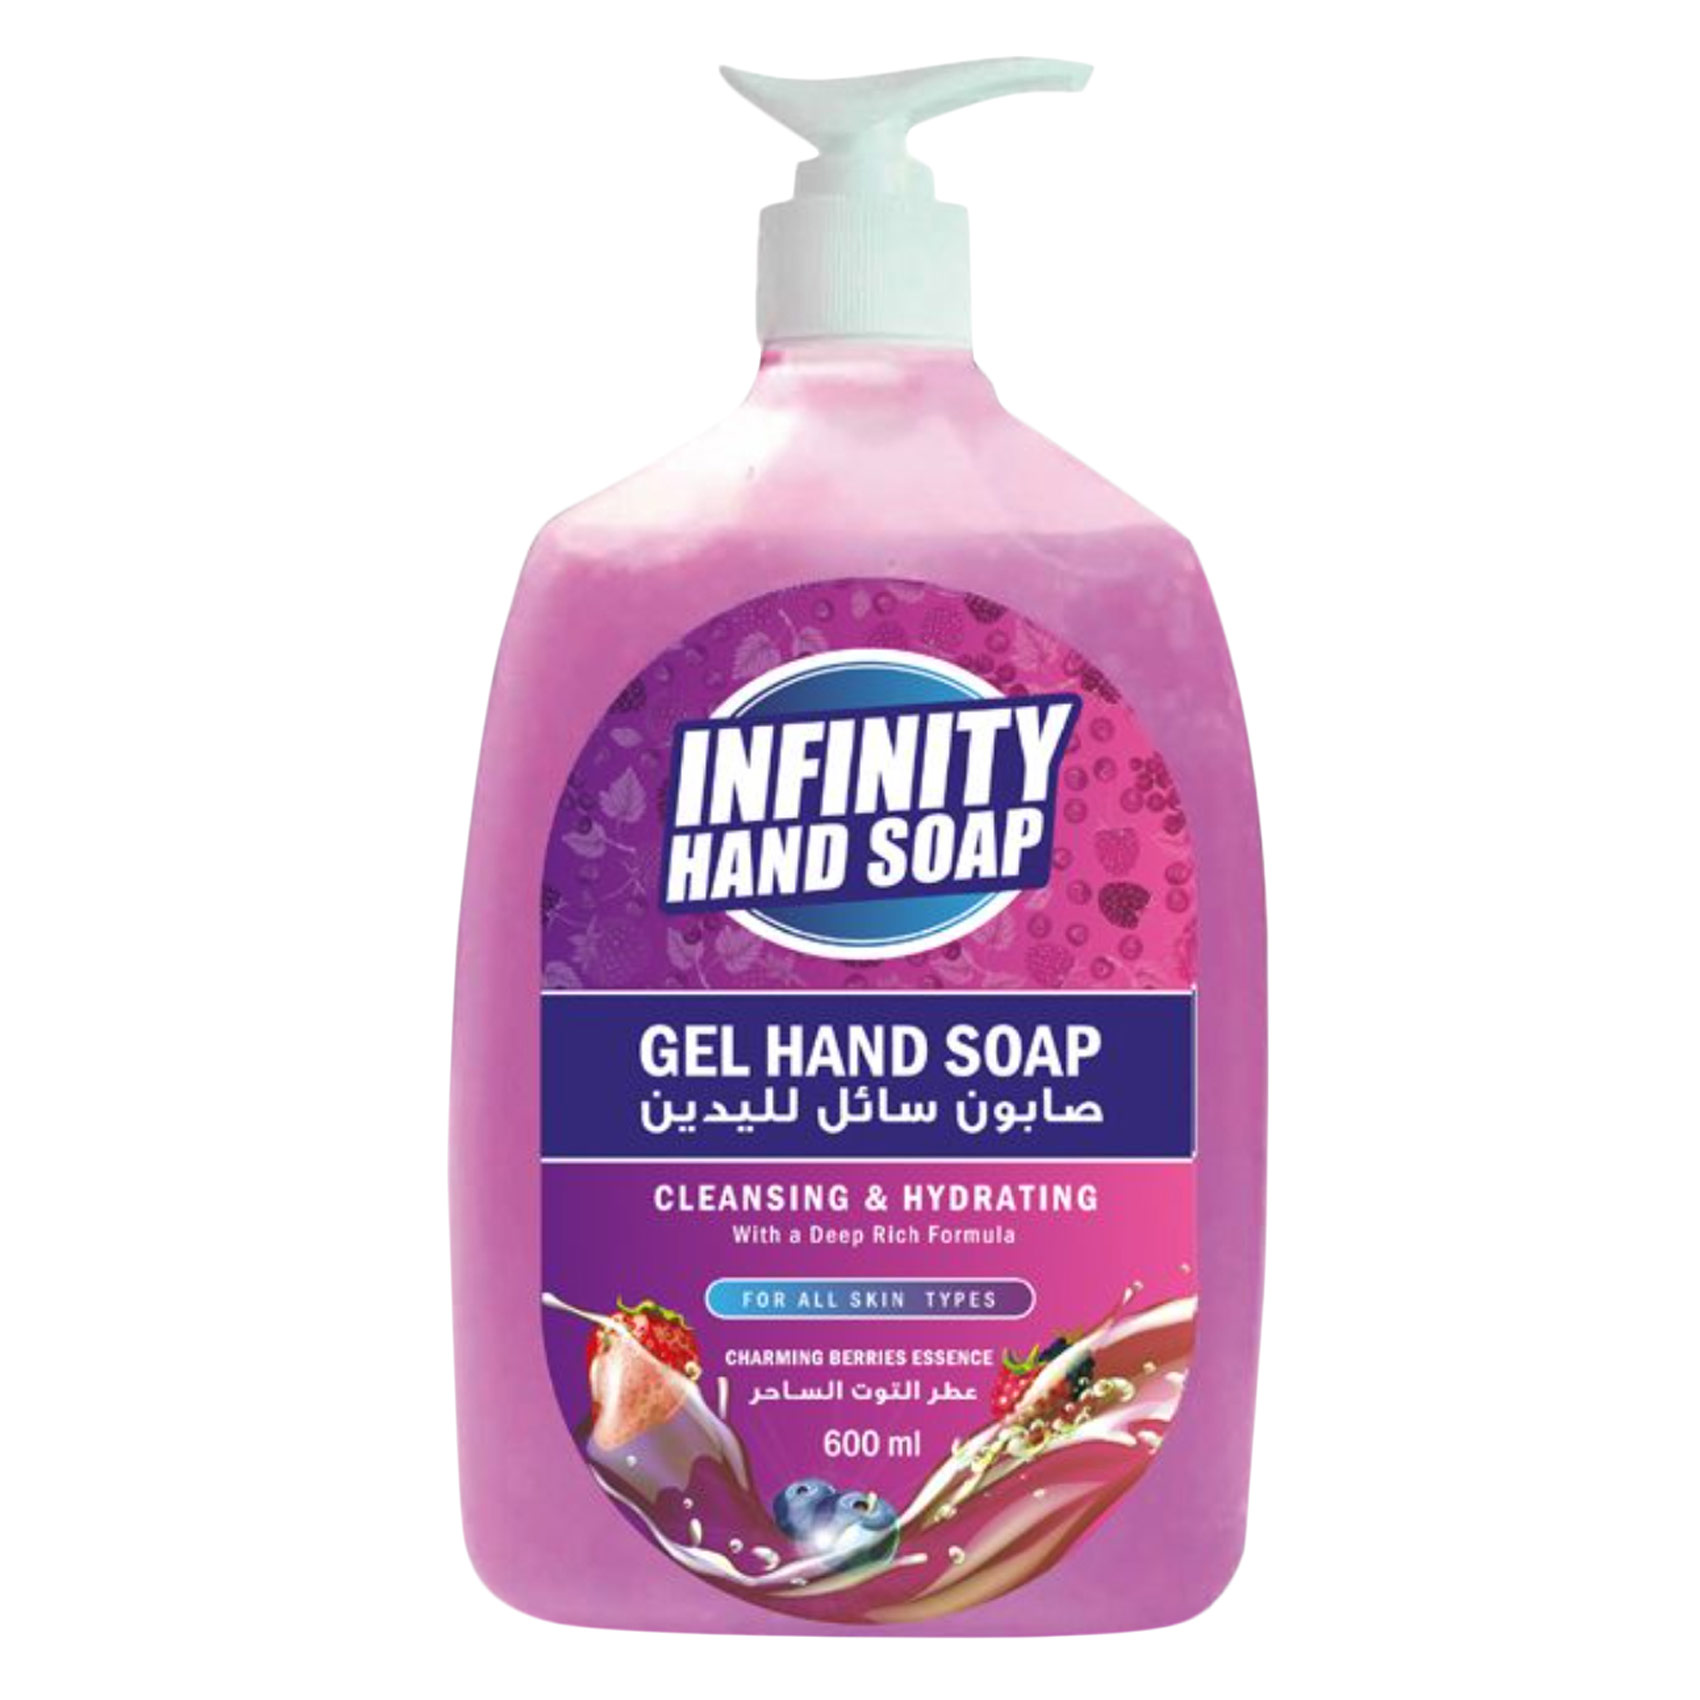 Infinity Charming Berries Essence Gel Hand Soap 600ML